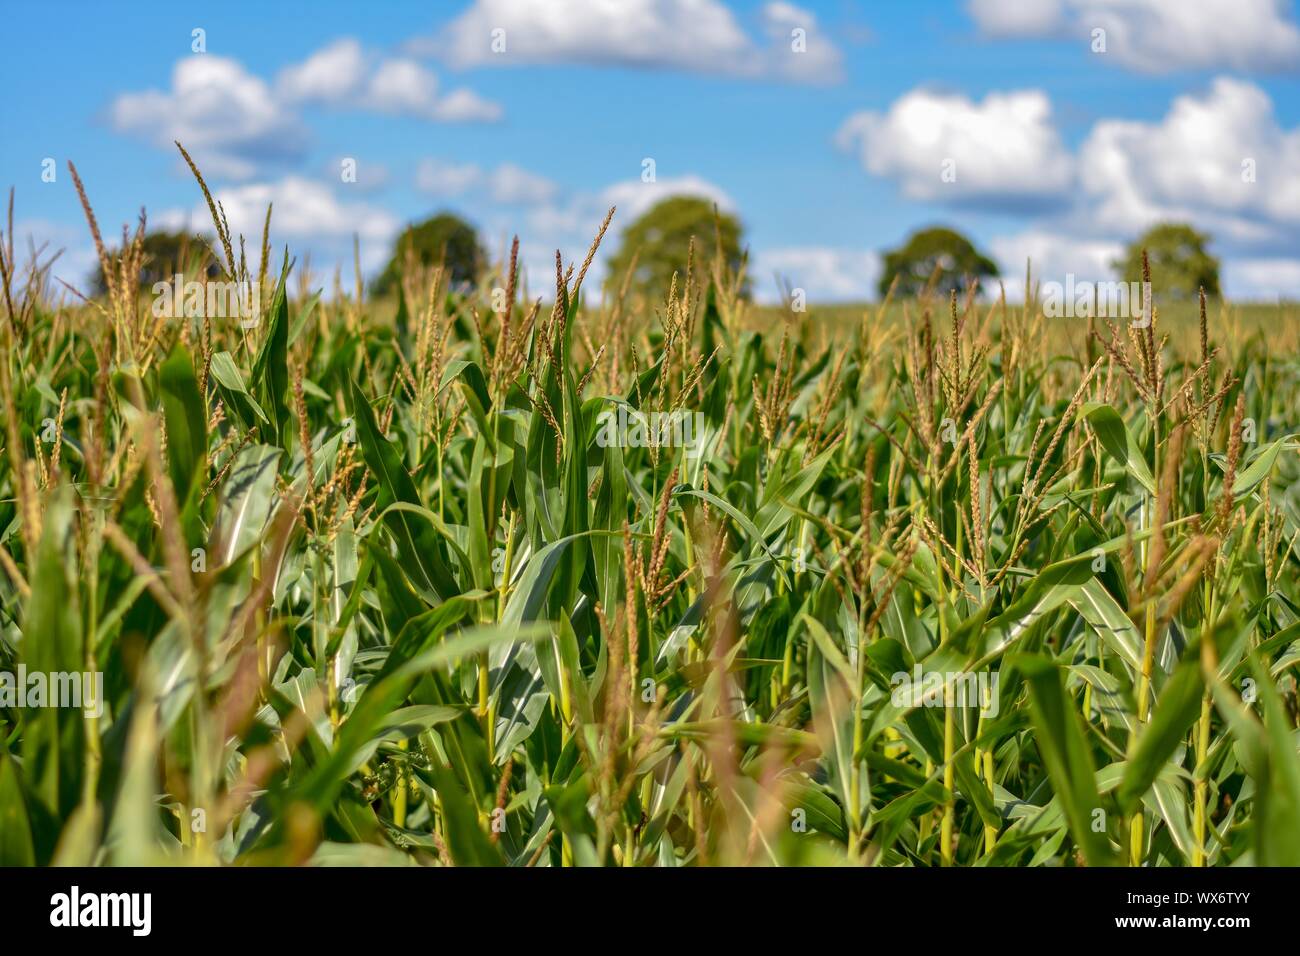 Symmetrical trees in a row in corn field Stock Photo